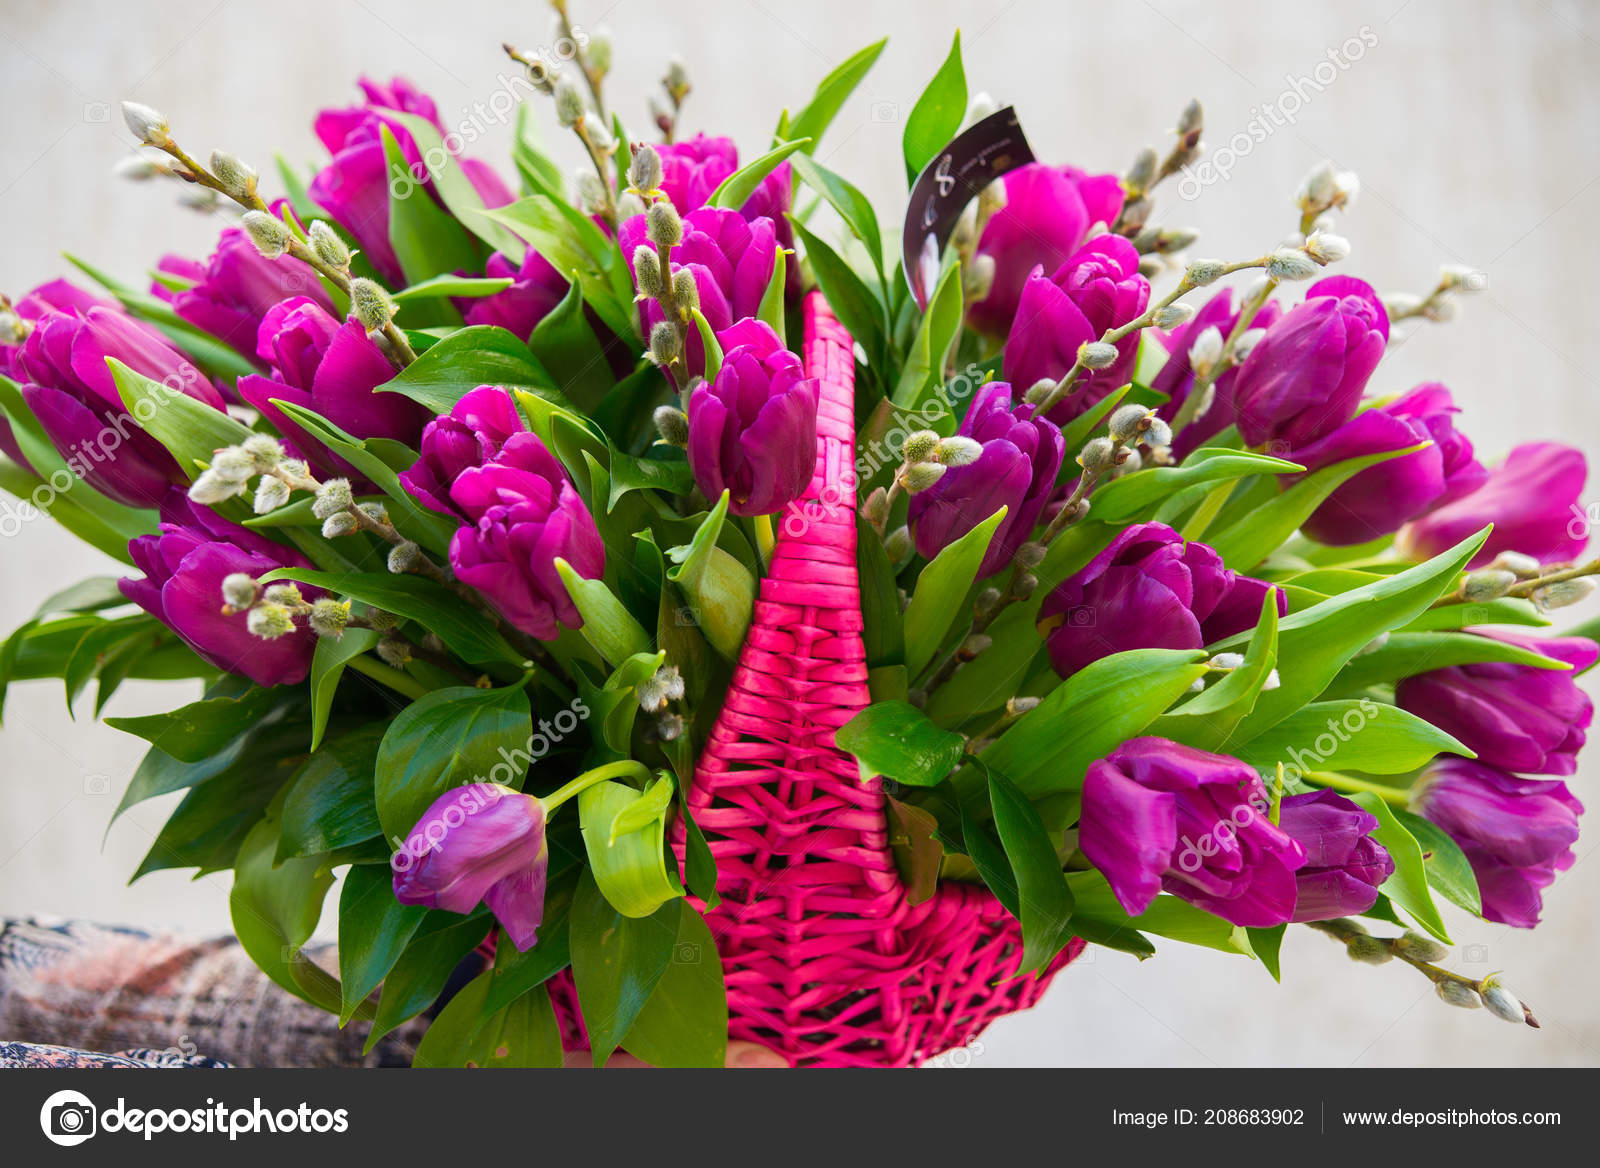 depositphotos_208683902-stock-photo-chic-bright-festive-bouquet-flowers.jpg